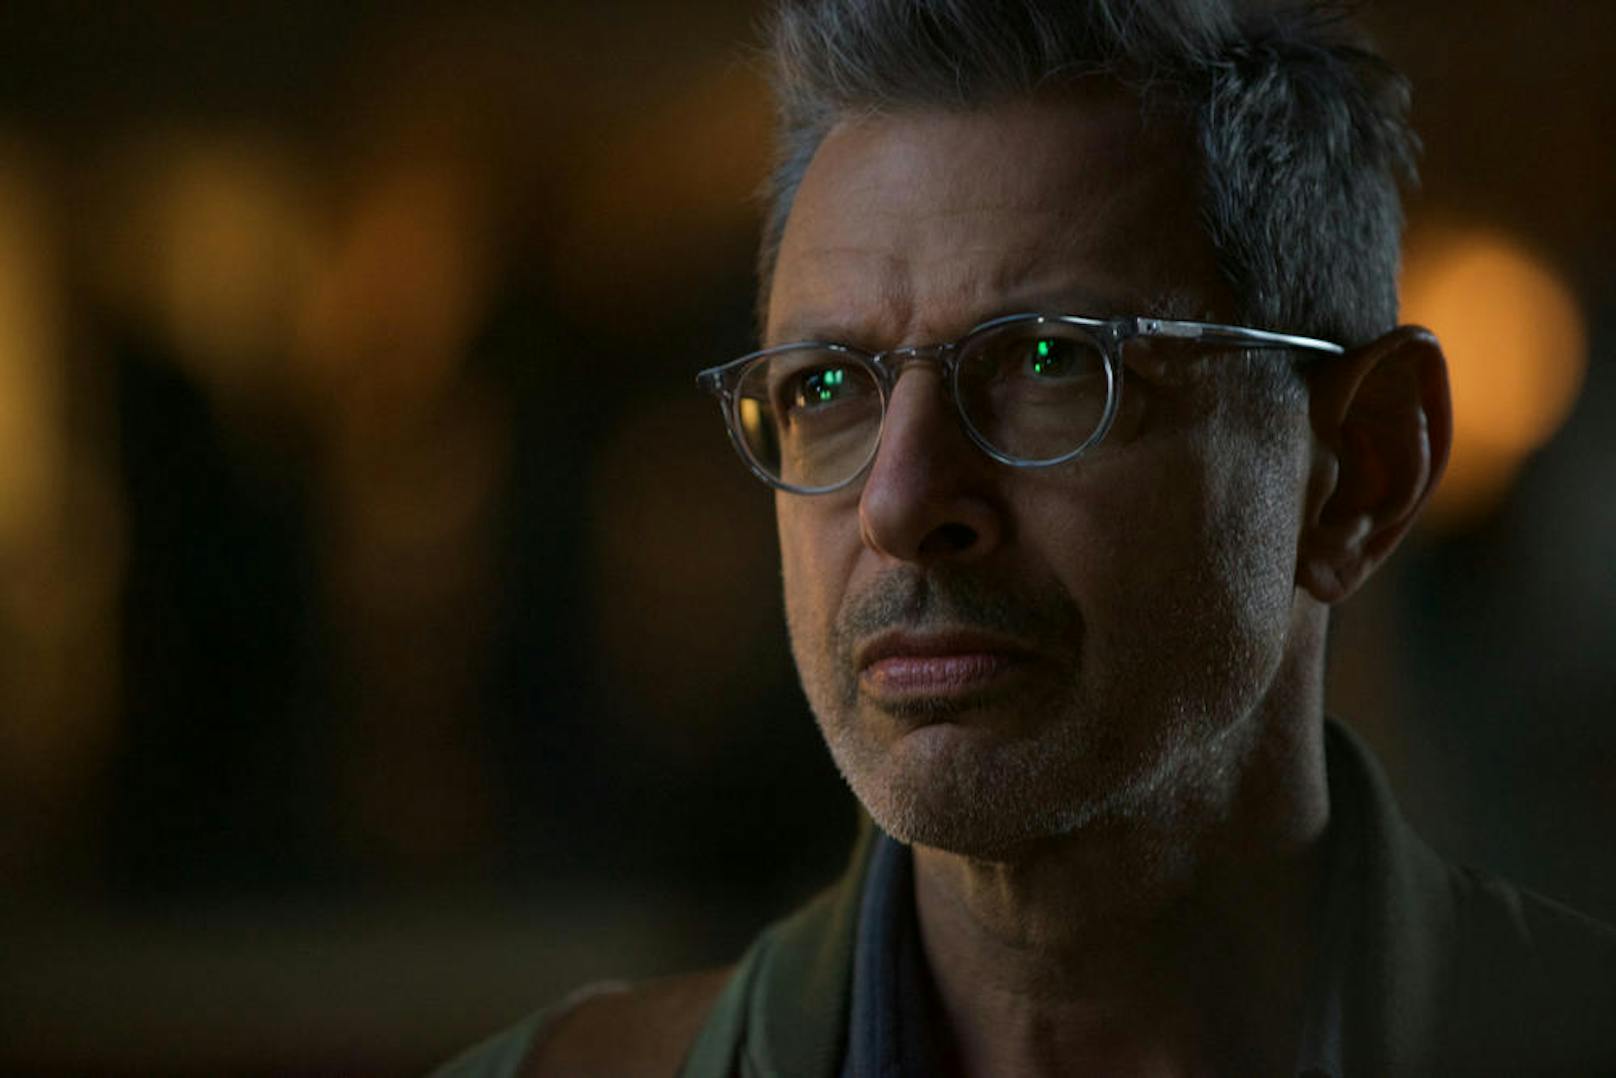 Jeff Goldblum in "Independence Day"